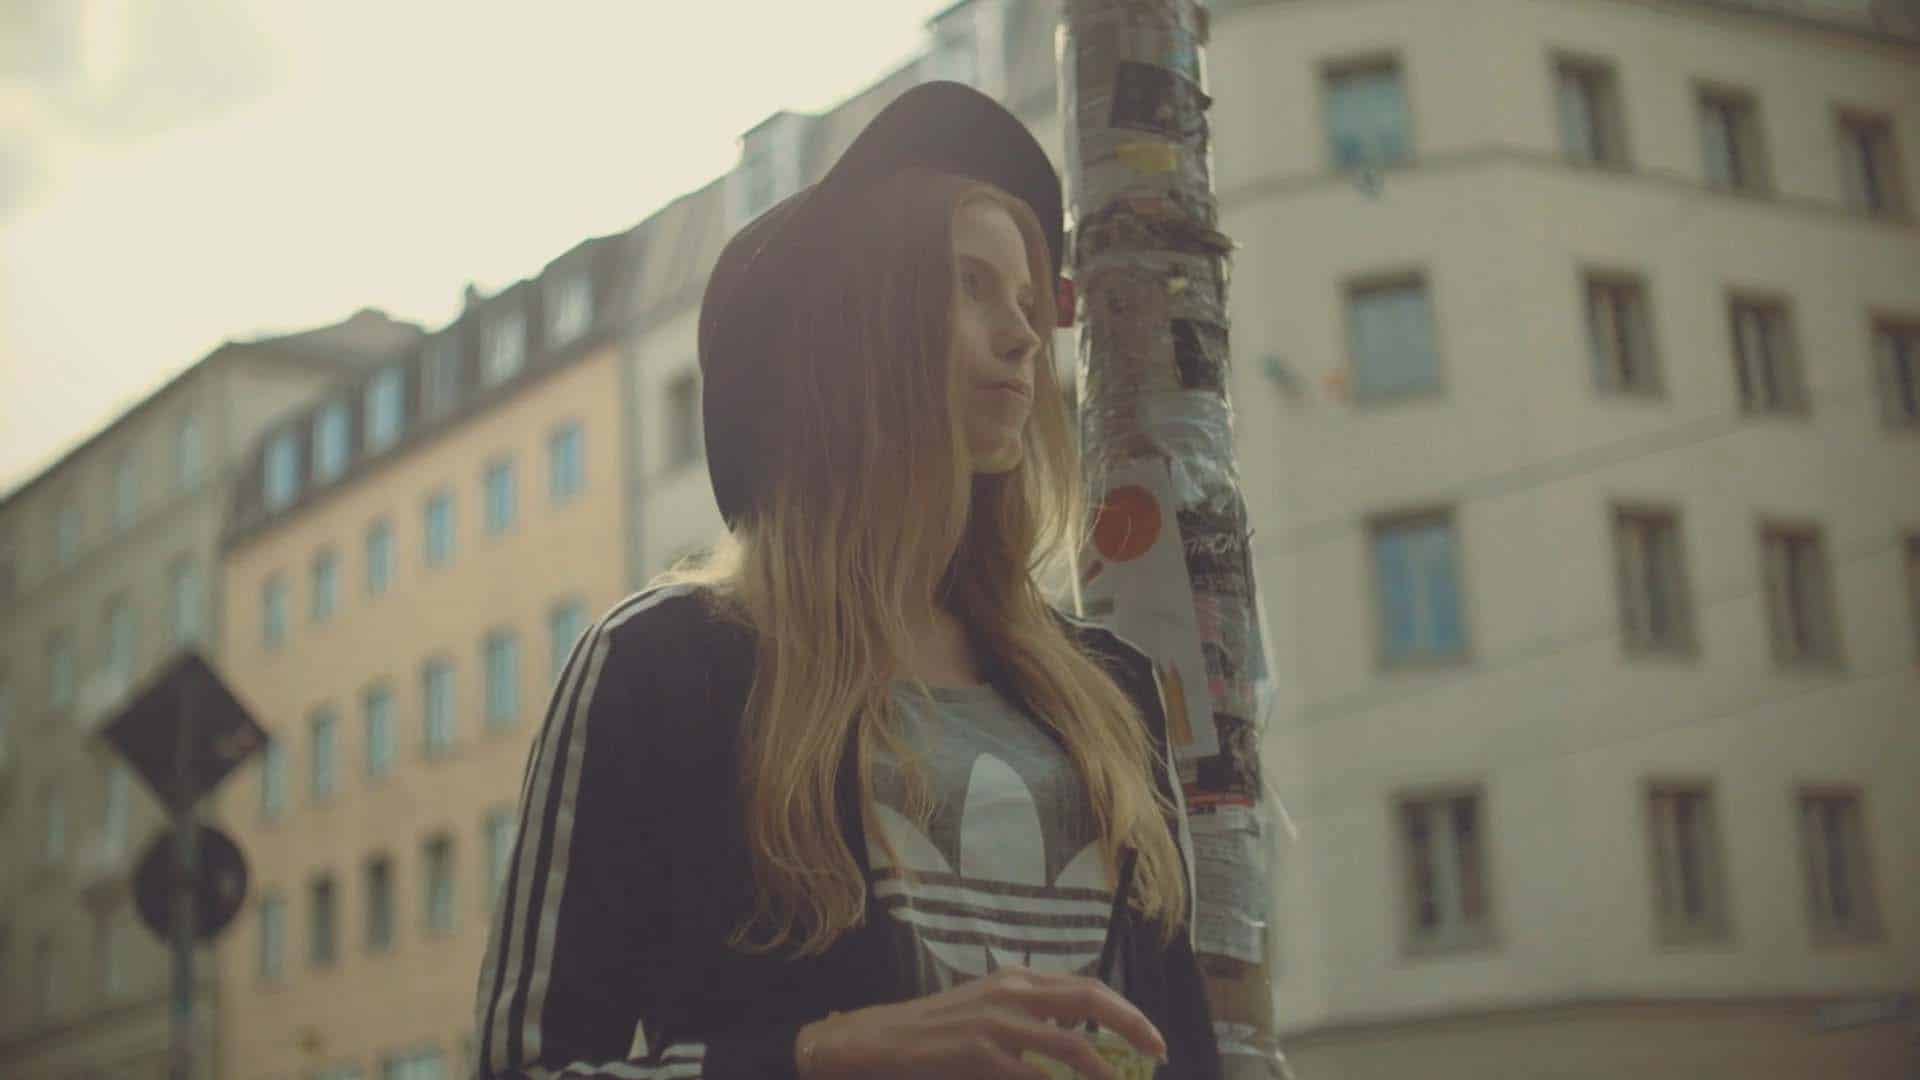 Tracksuit Day Social Teaser - Darstellerin trägt Hut auf der Straße - Filmproduktion hawkins.film